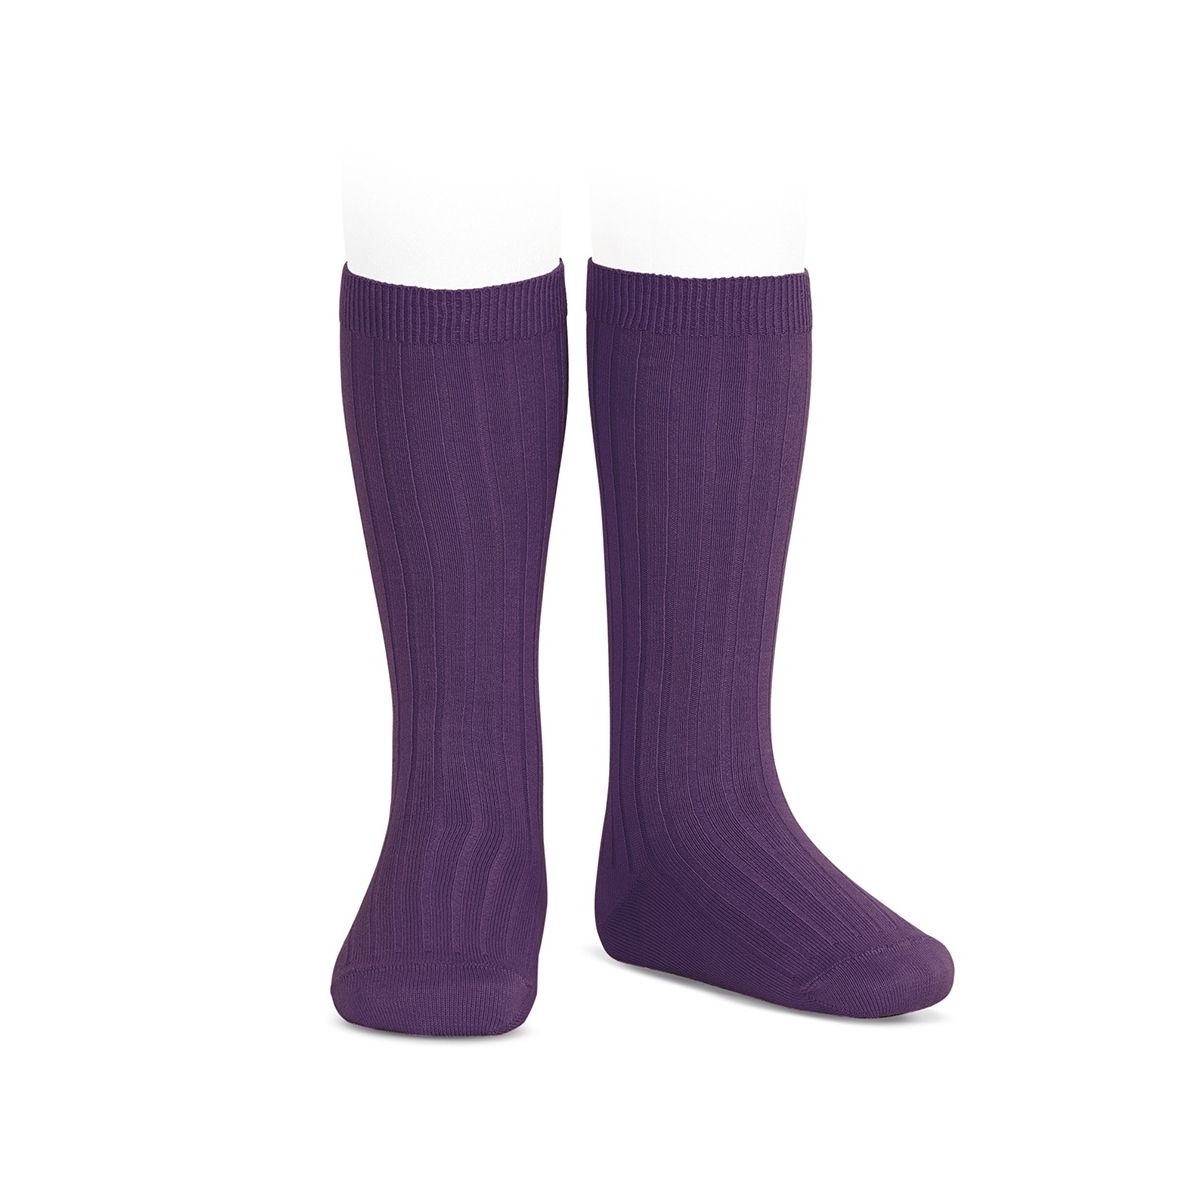 Condor - Wide Ribbed Cotton Knee High Socks aubergine - Strumpfhosen und Socken - 2.016/2_180 